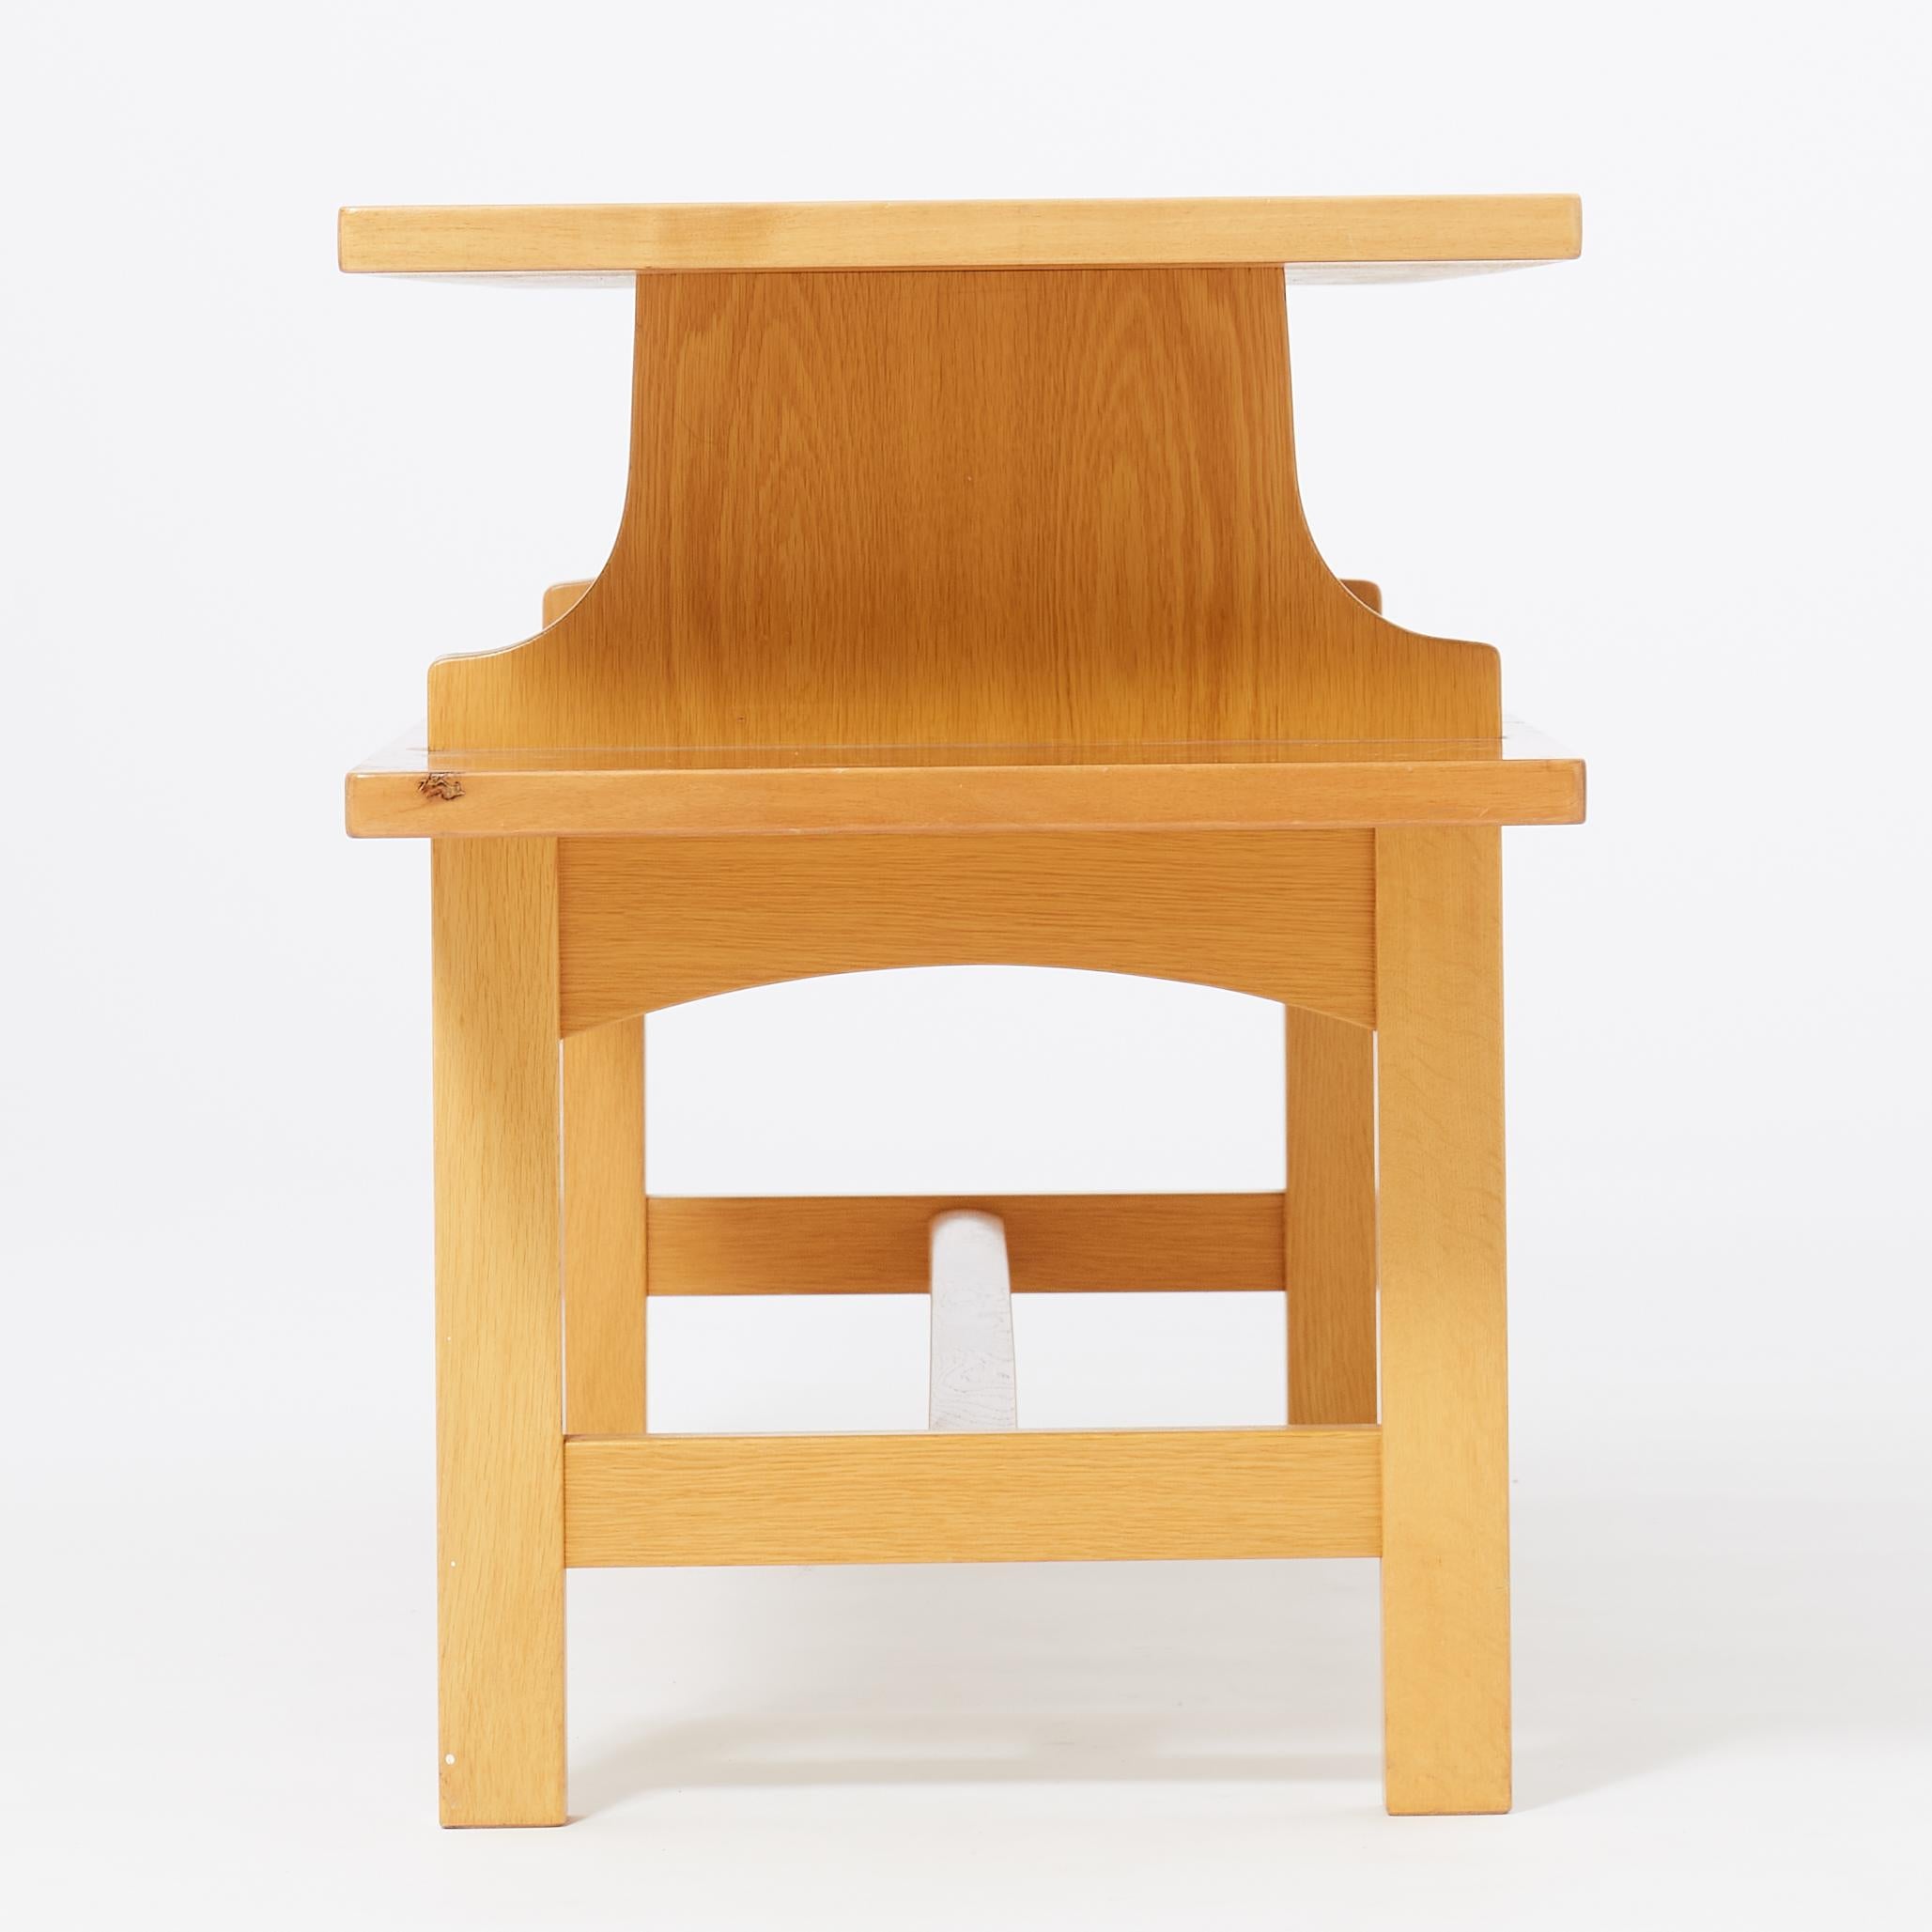 Josef Frank (1885-1967). Library table. Model number 2117. Firma Svenskt Tenn 1950s. Tops in valnöt, Legs in oak. Measures: L 180, B 55, H 75 cm.

Designed in 1951.